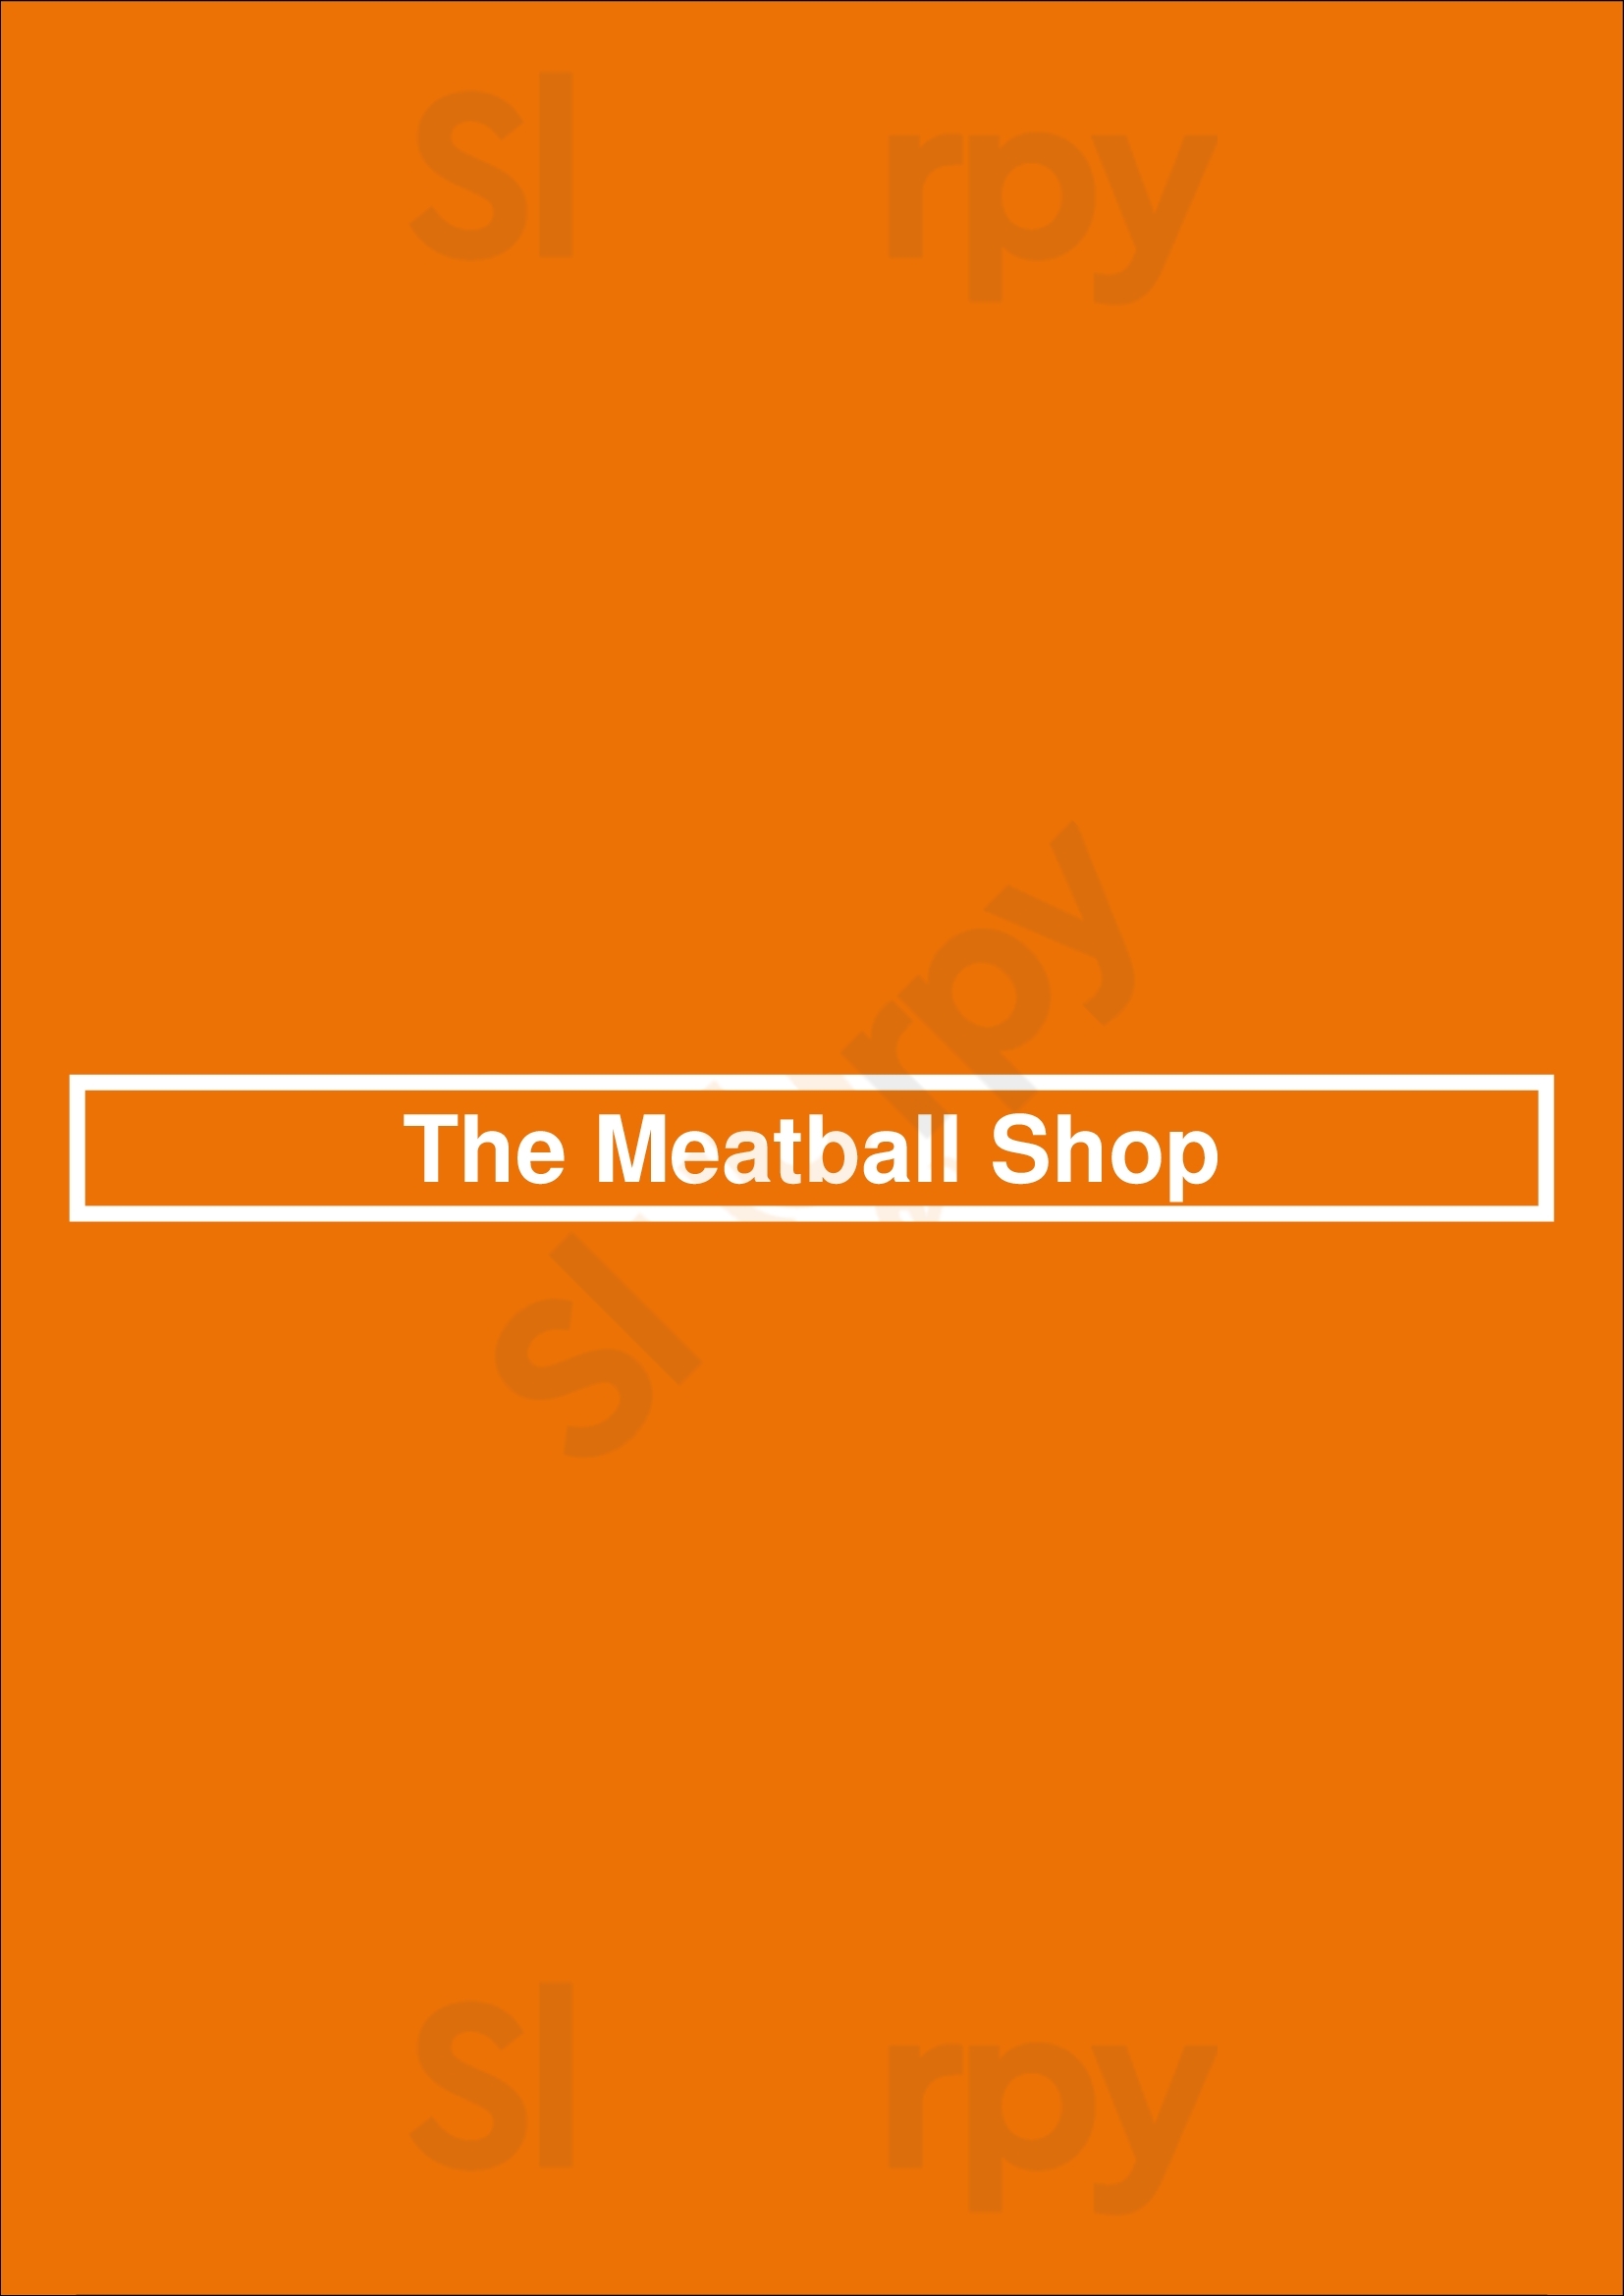 The Meatball Shop New York City Menu - 1